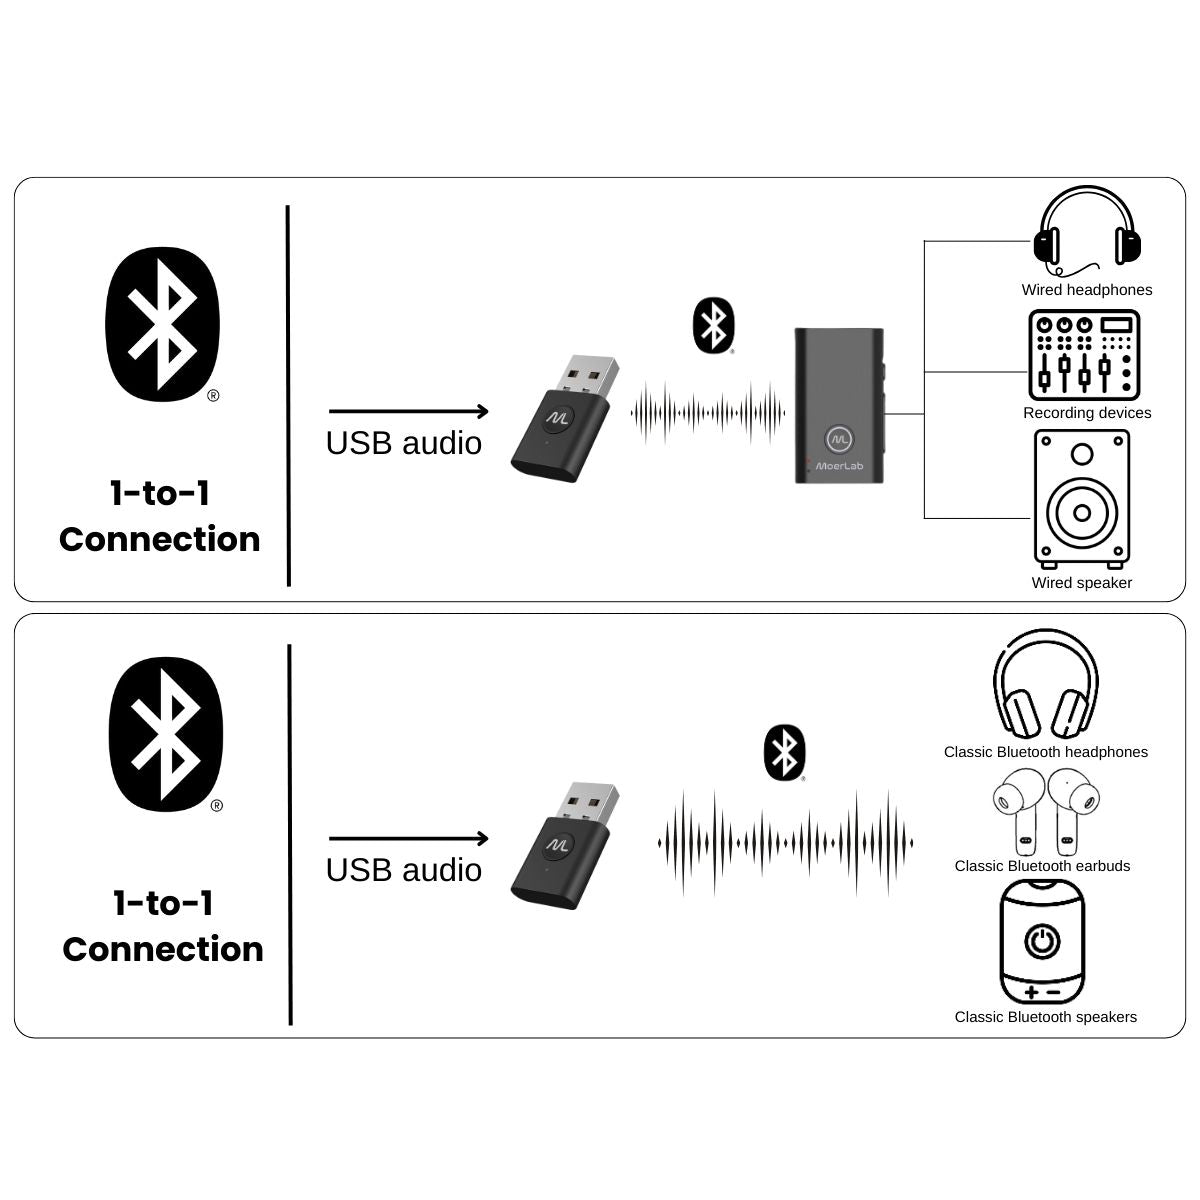 MoerLink™ Bluetooth 5.3 Auracast Audio Transmitter